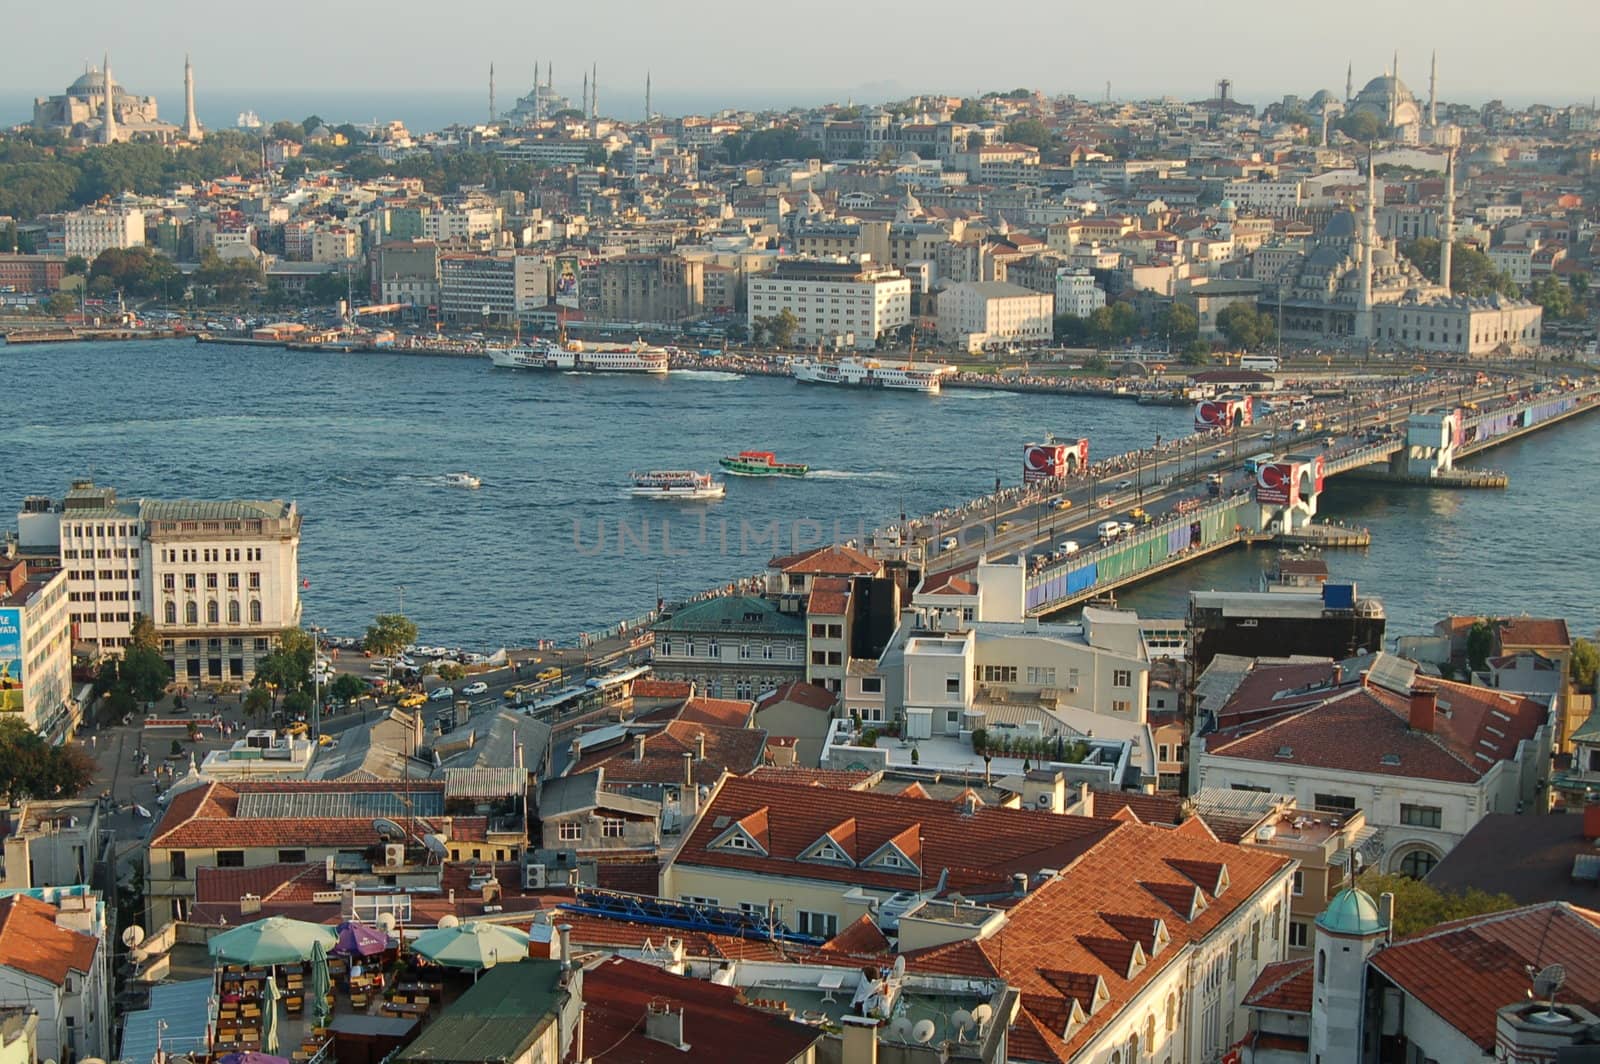 Historic Istanbul and galata bridge seen from Galata Tower